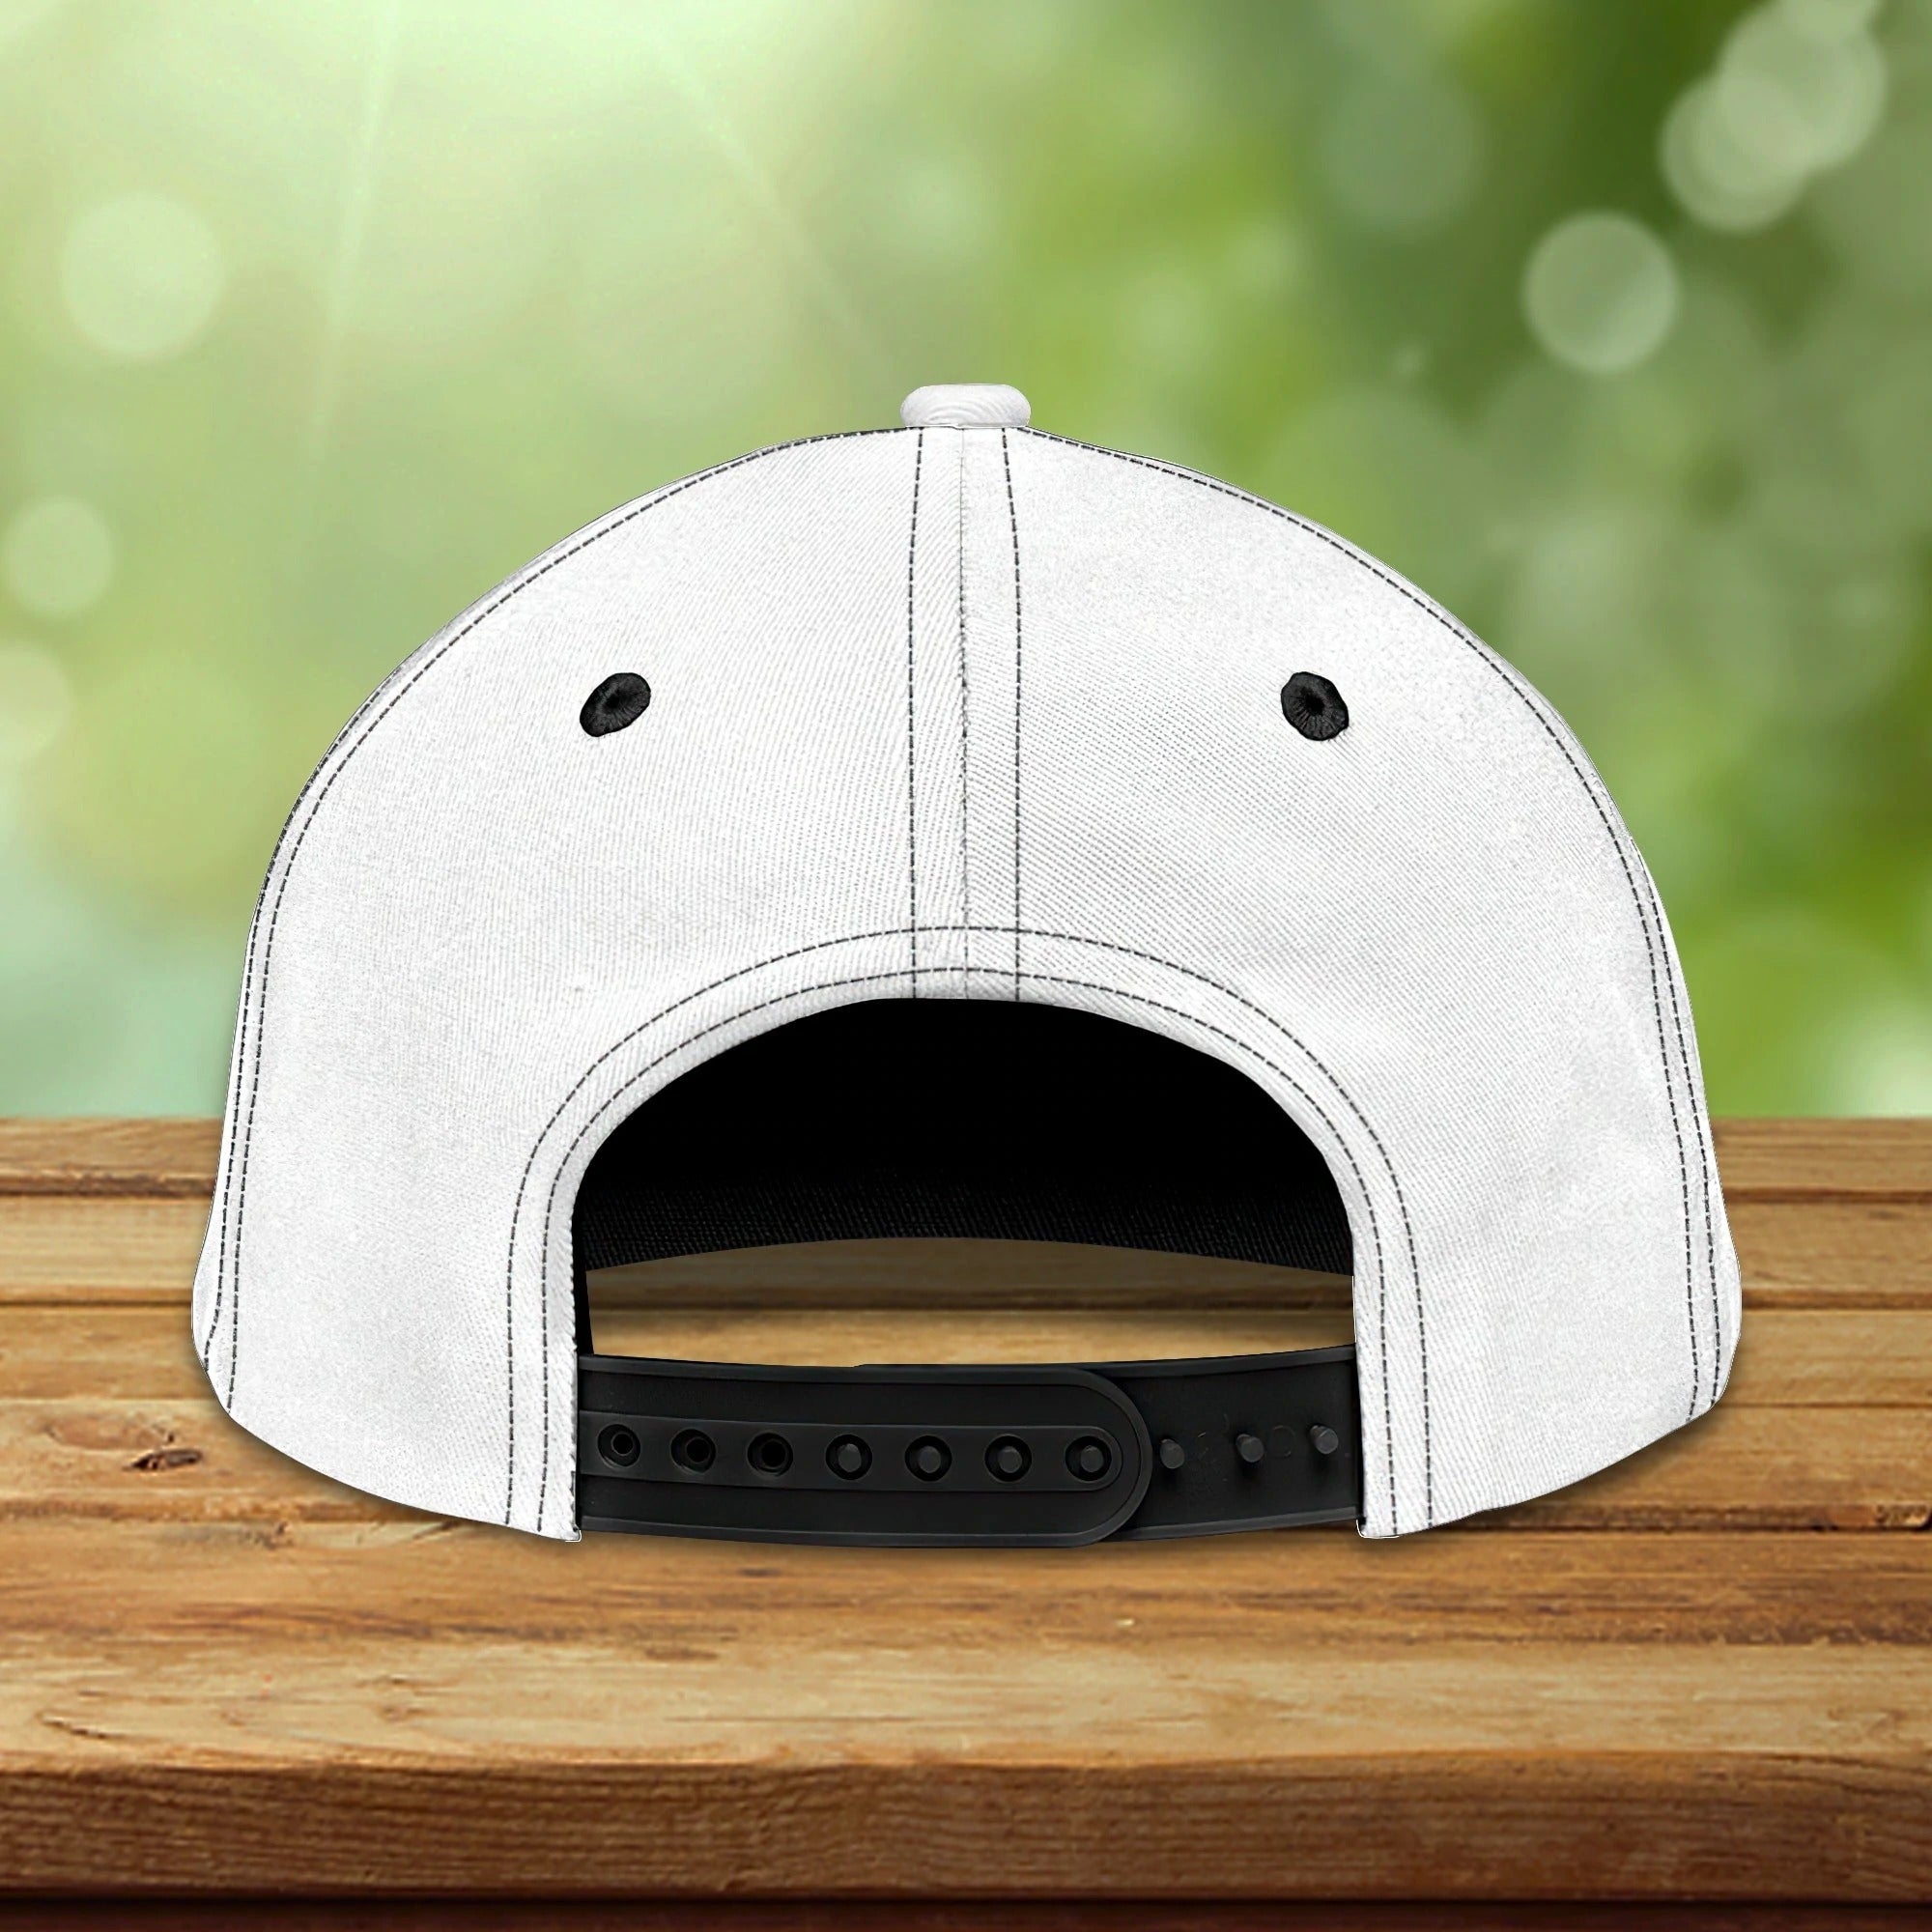 Customized Texas Baseball Cap/ Texas Cap/ American Strong Support Texas Classic 3D Cap Hat